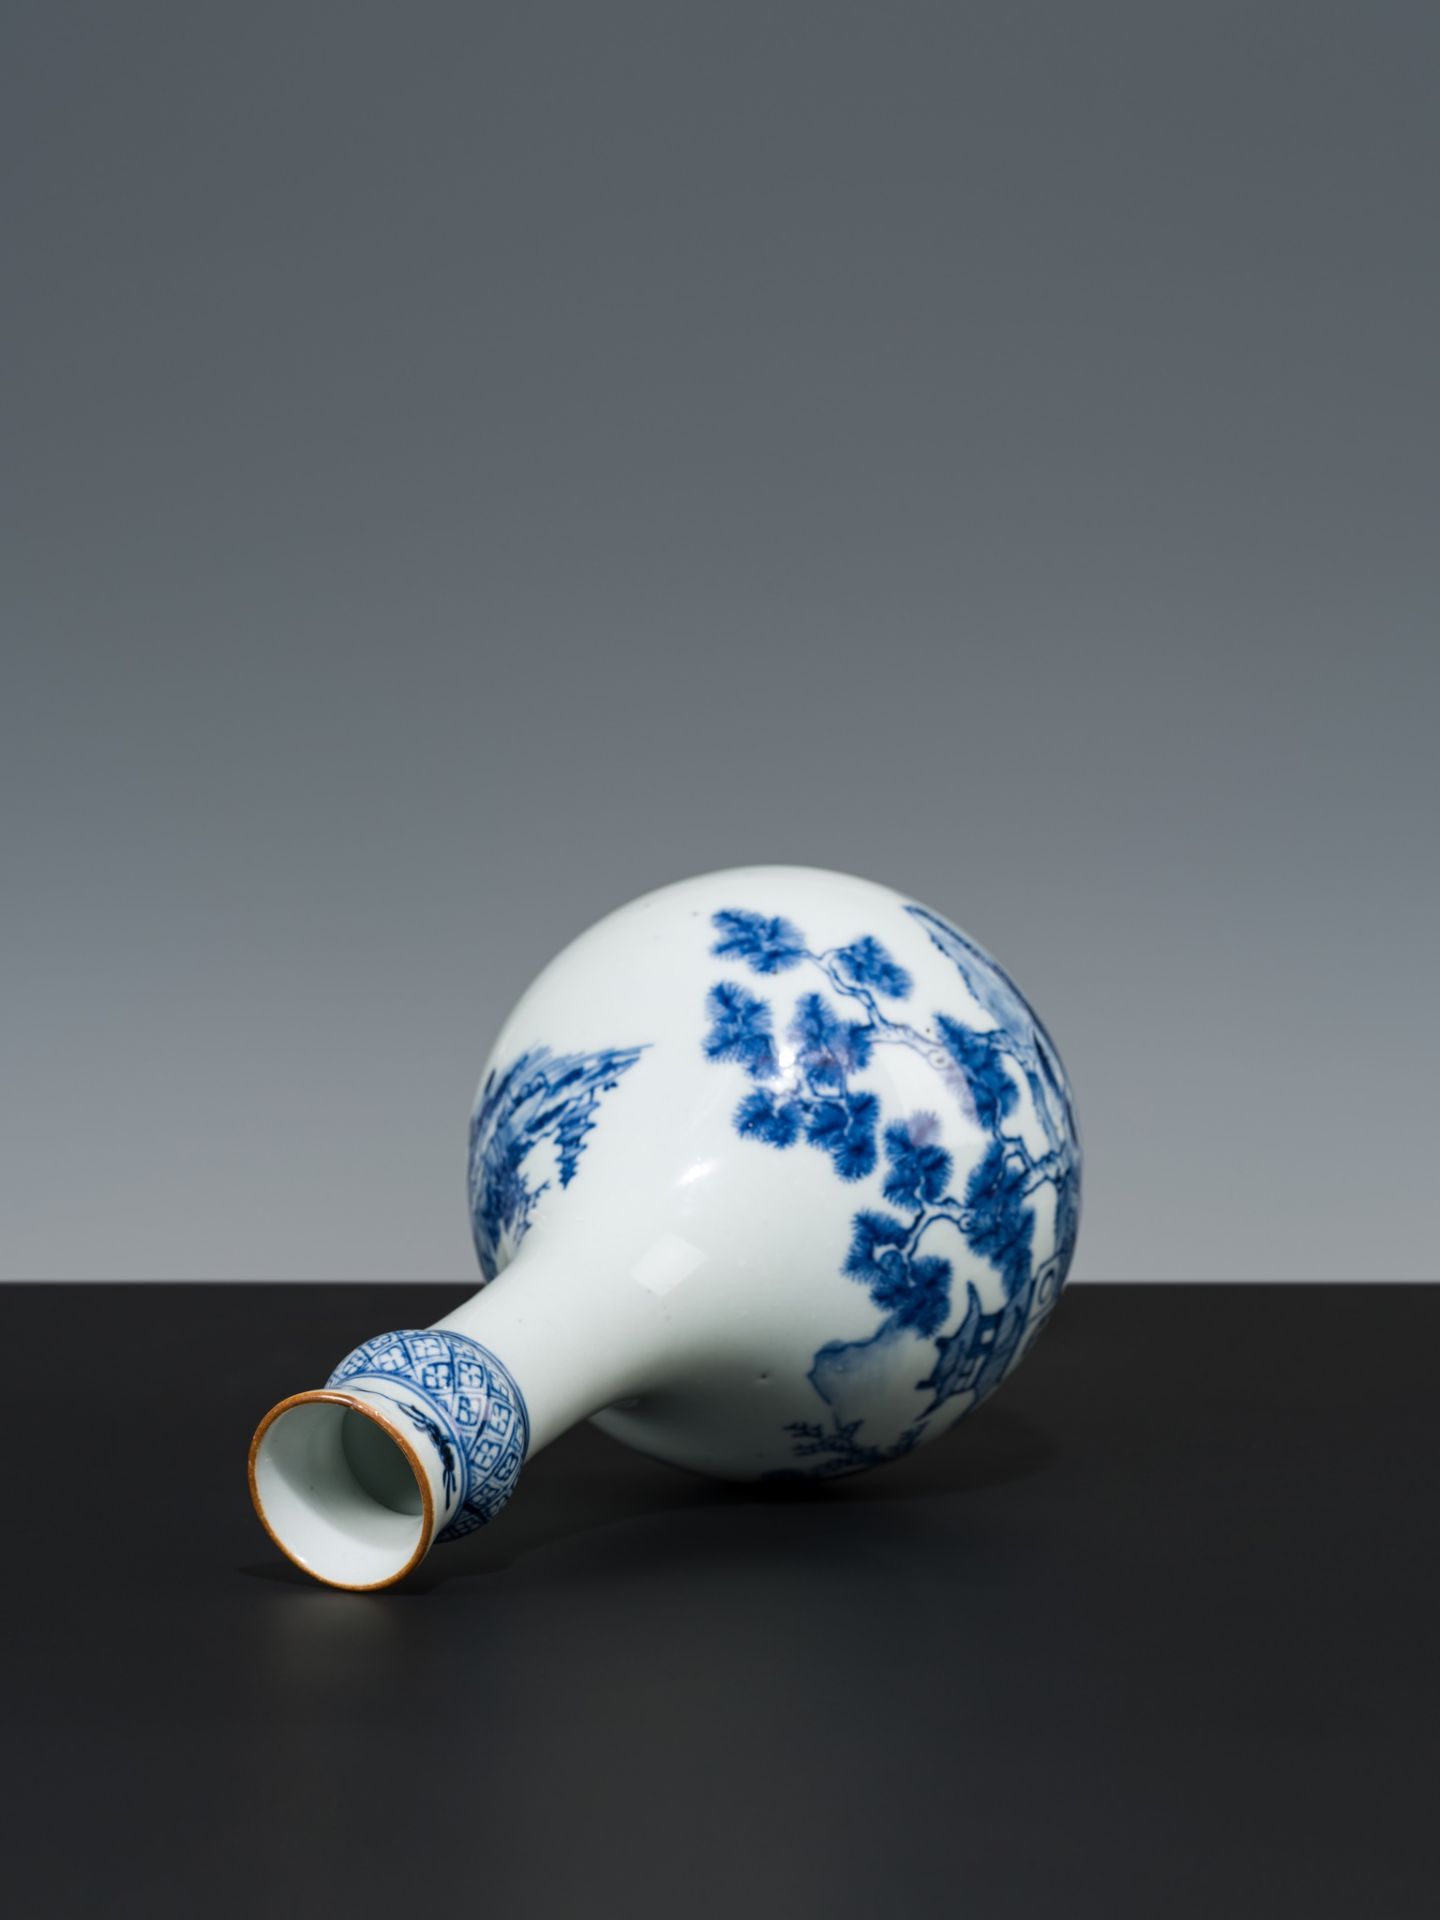 A BLUE AND WHITE PORCELAIN BOTTLE VASE, CHINA, 18TH CENTURY - Image 8 of 8